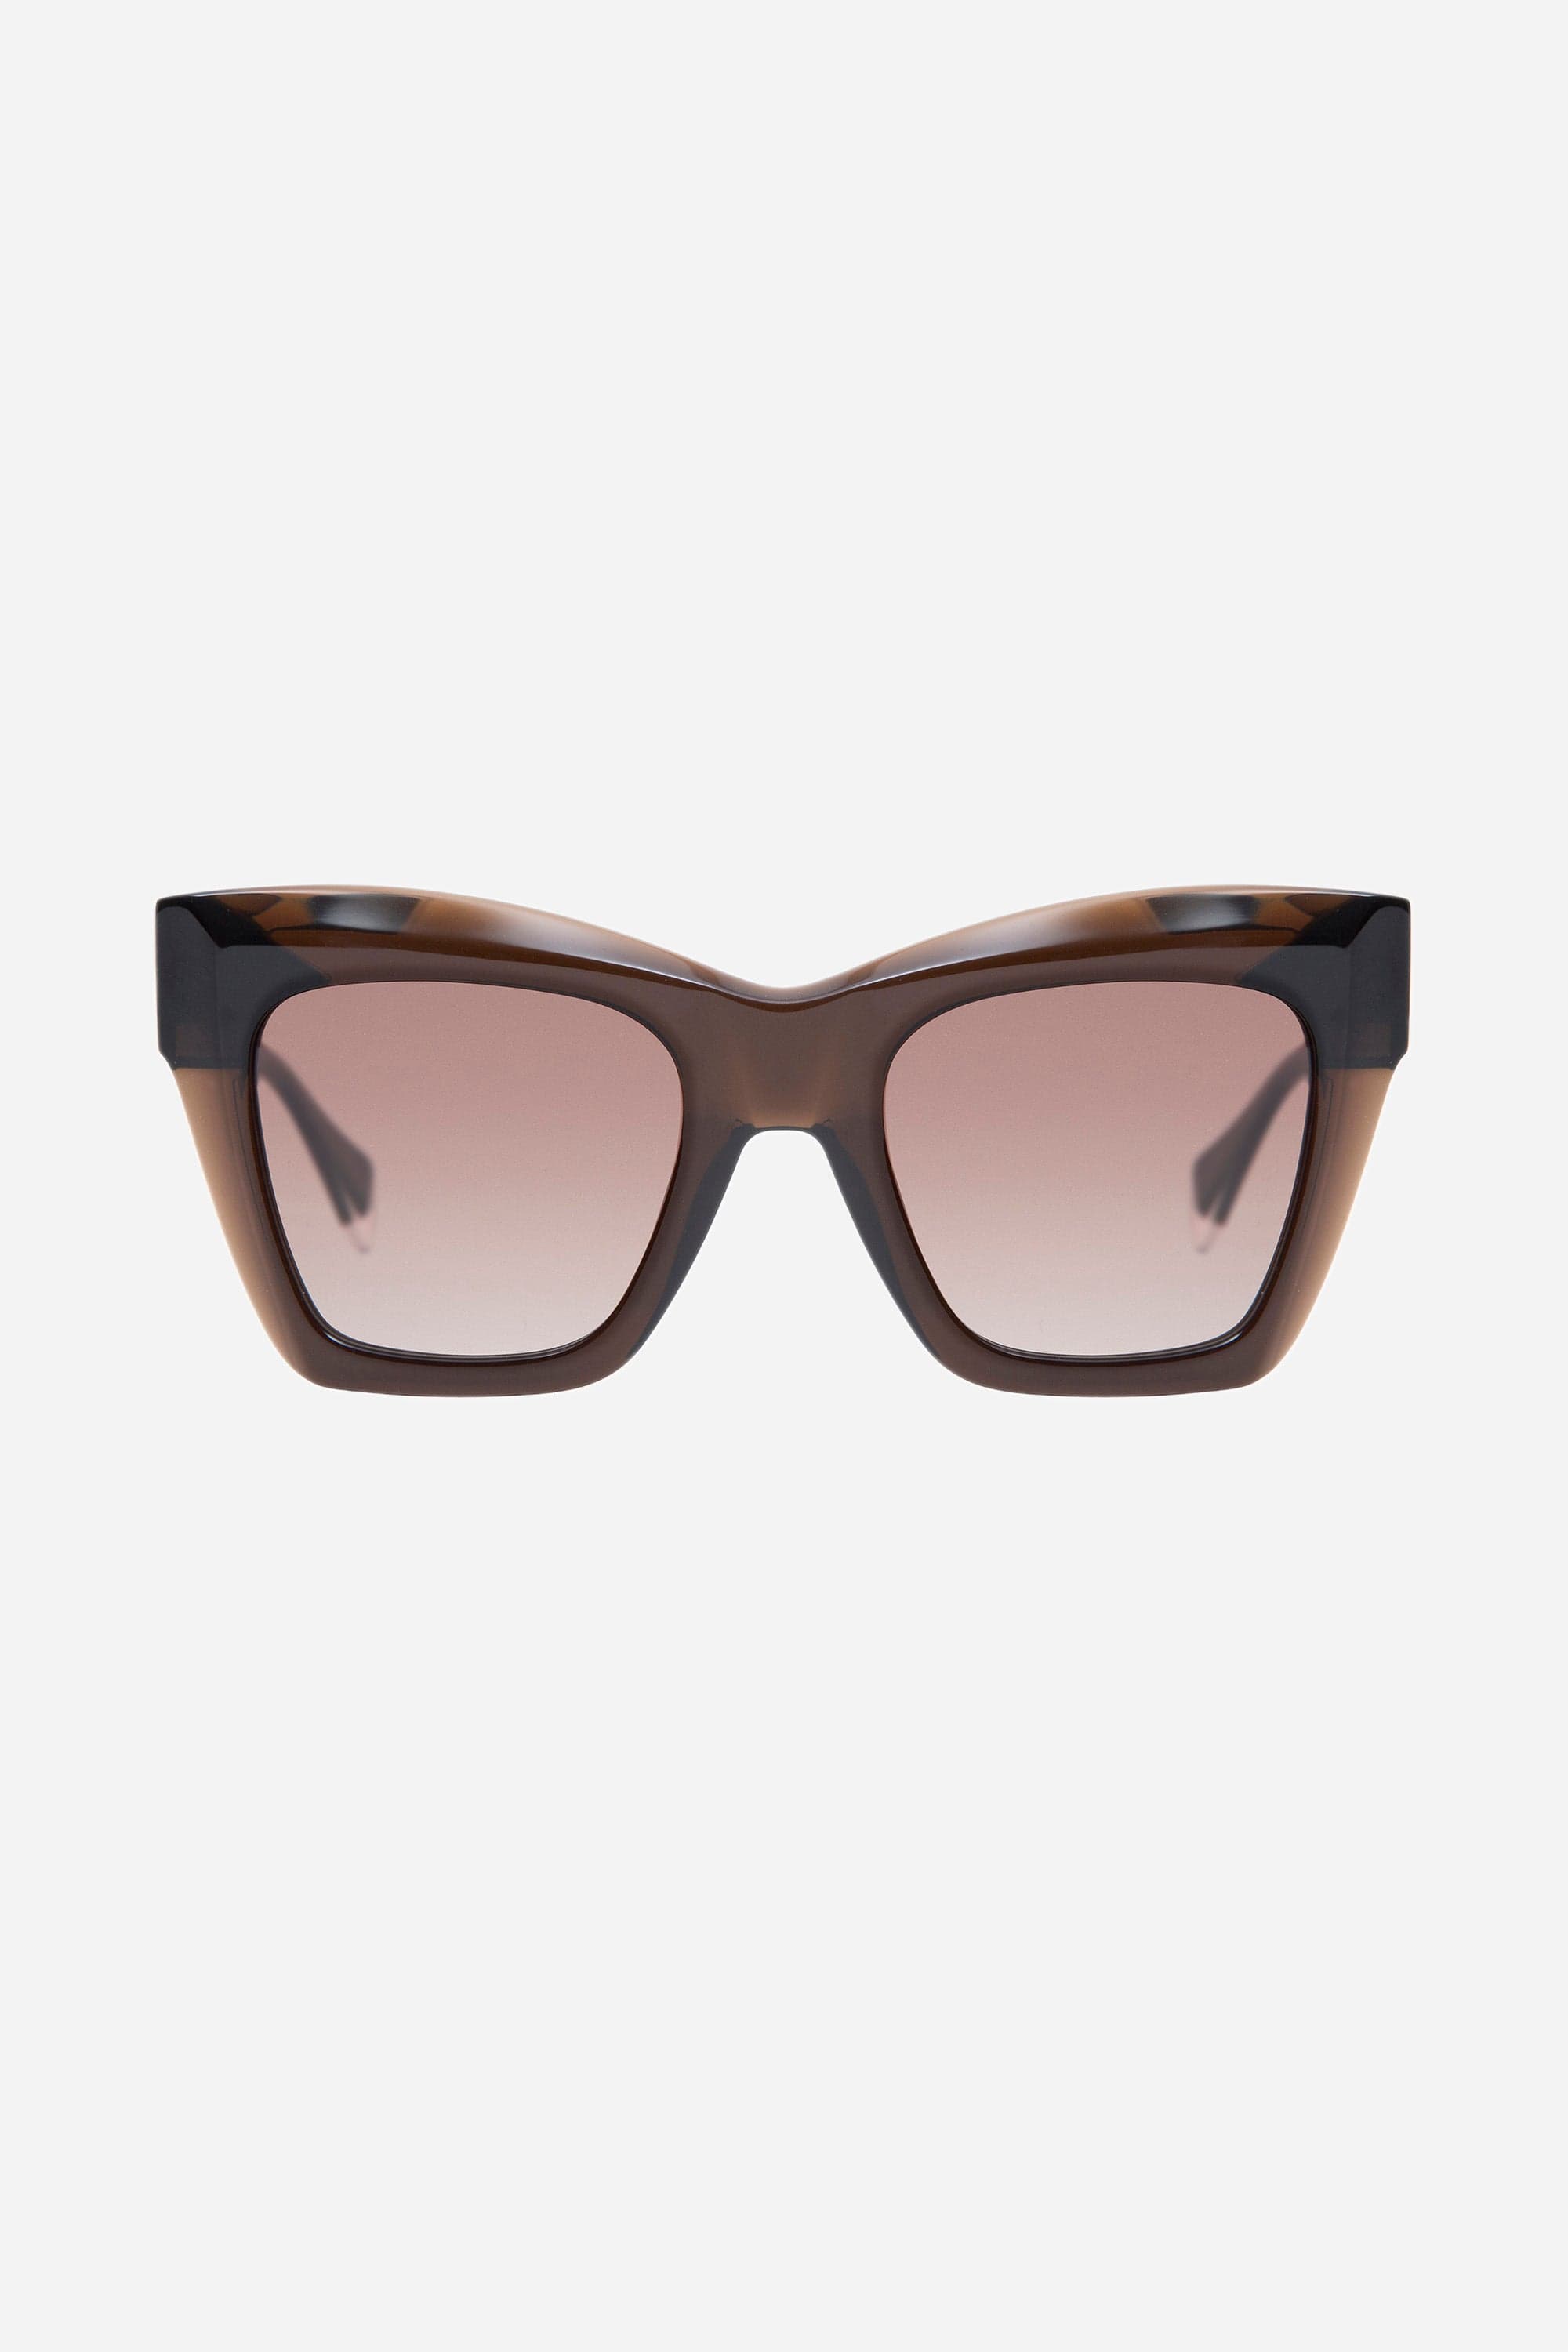 Gigi Studios cat eye brown sunglasses - Eyewear Club